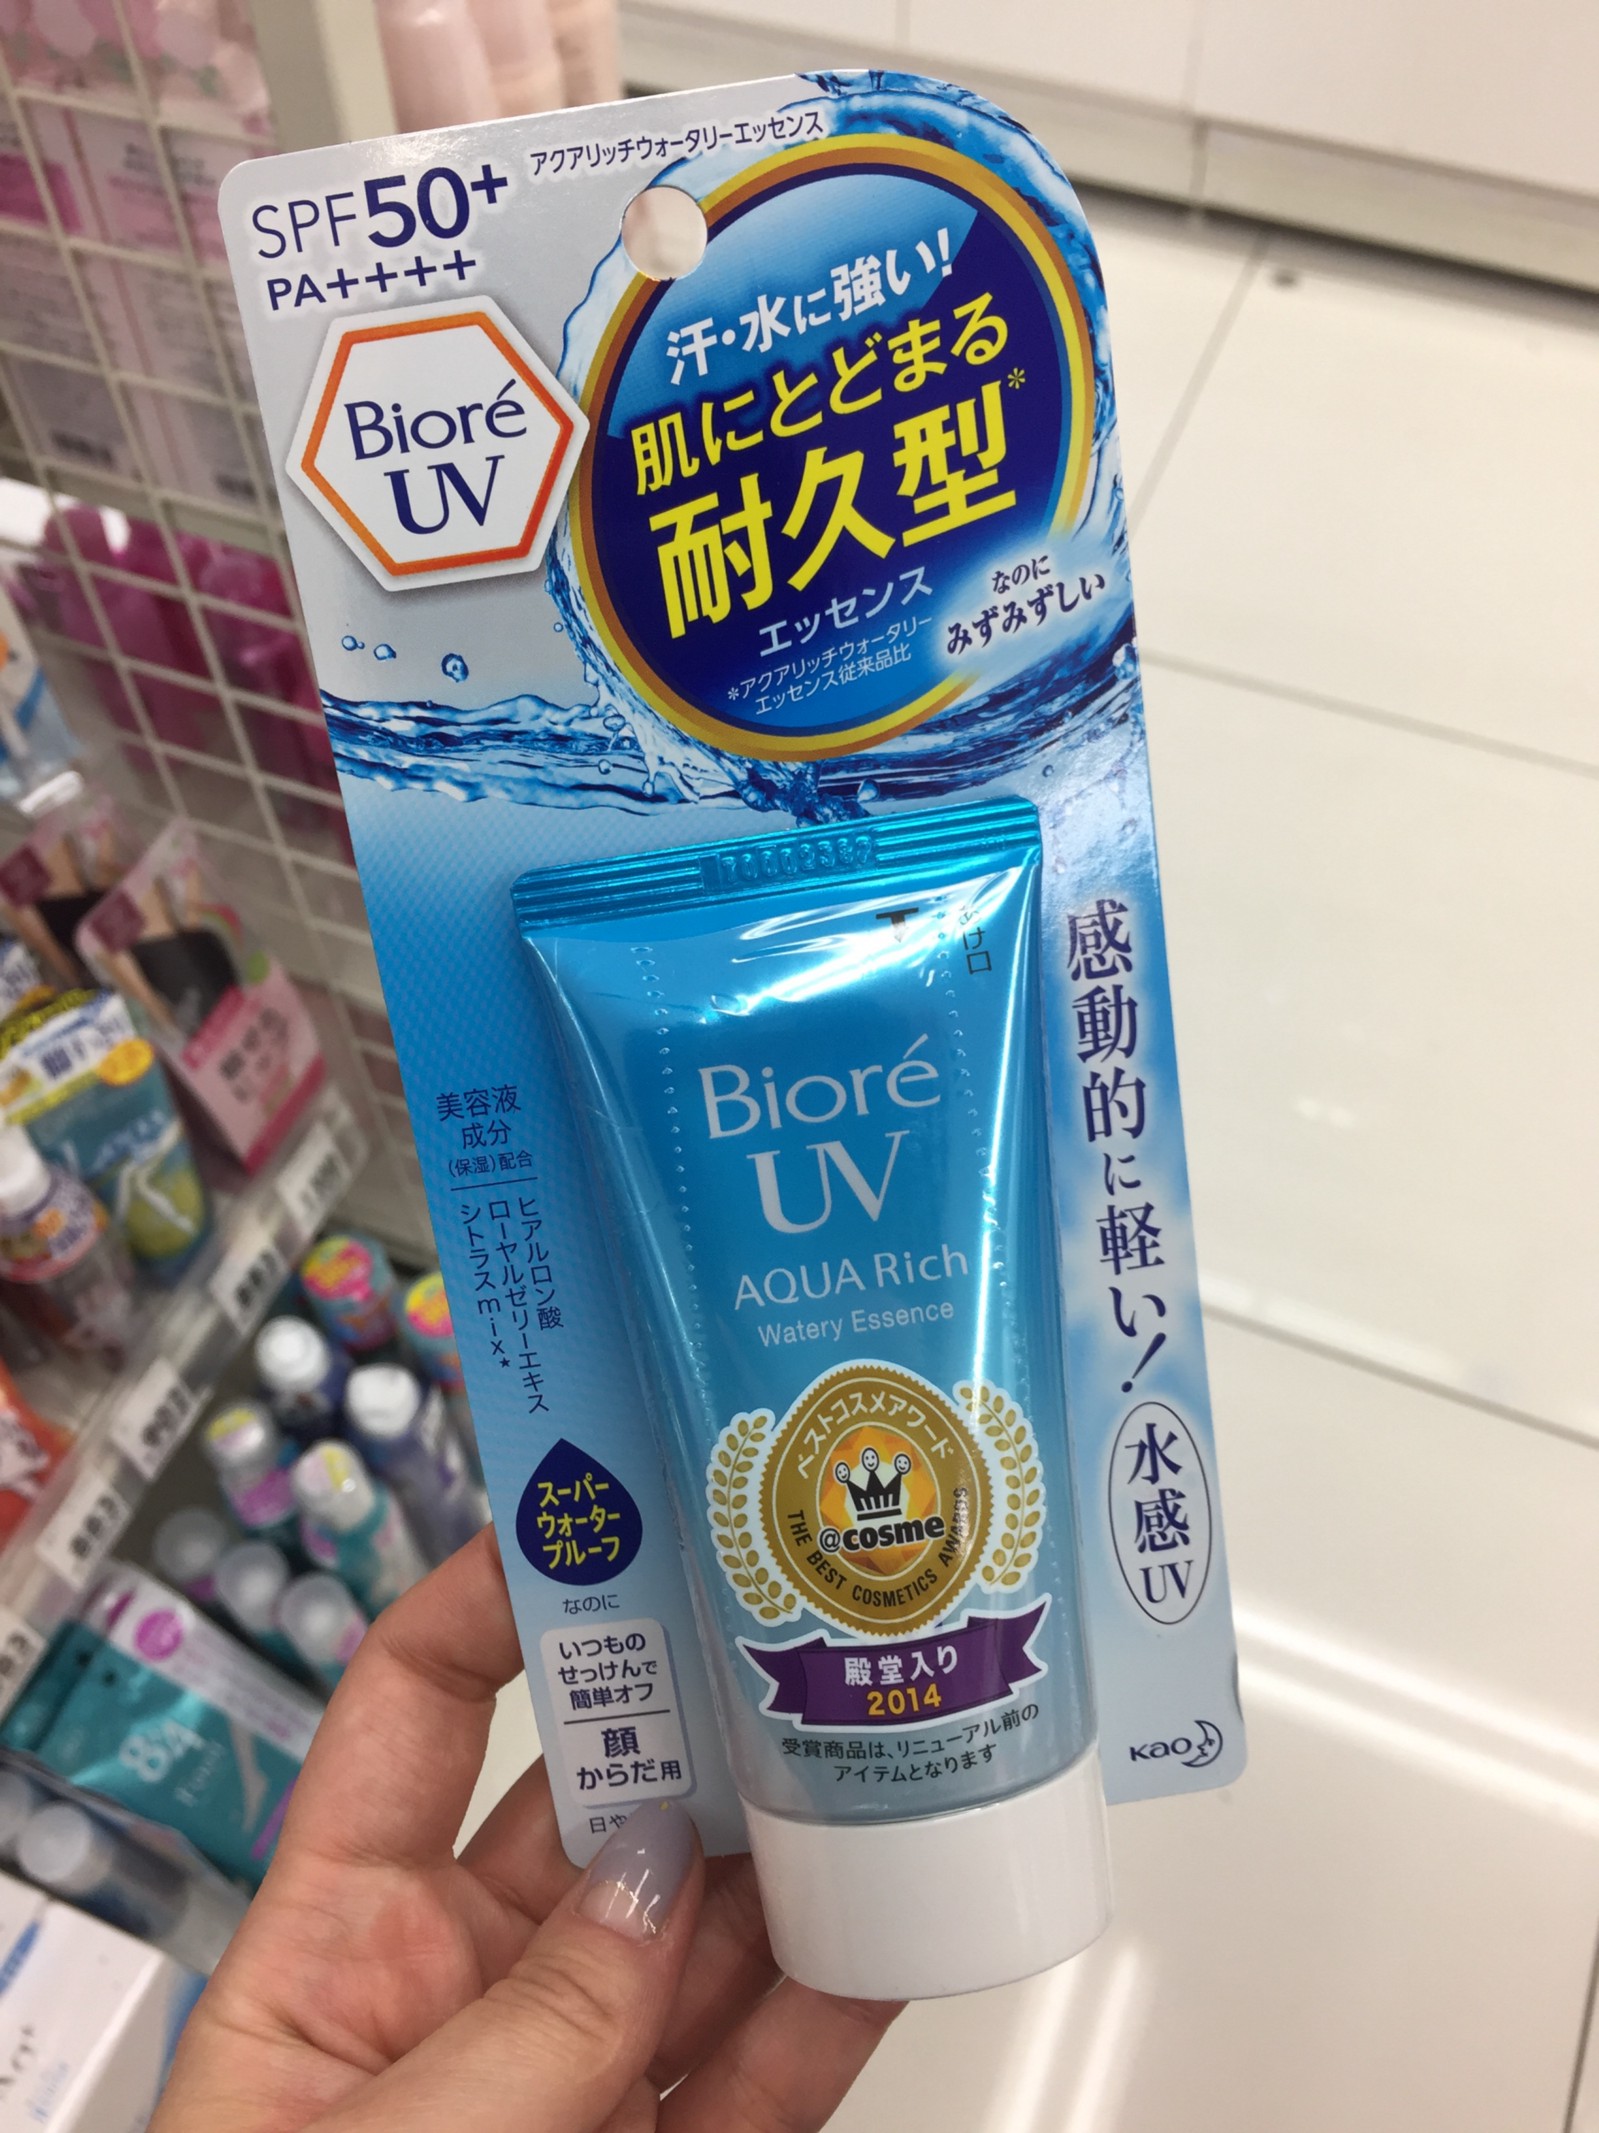 Top selling Japanese sunscreen: Biore UV Aqua Rich Watery Essence SPF 50+